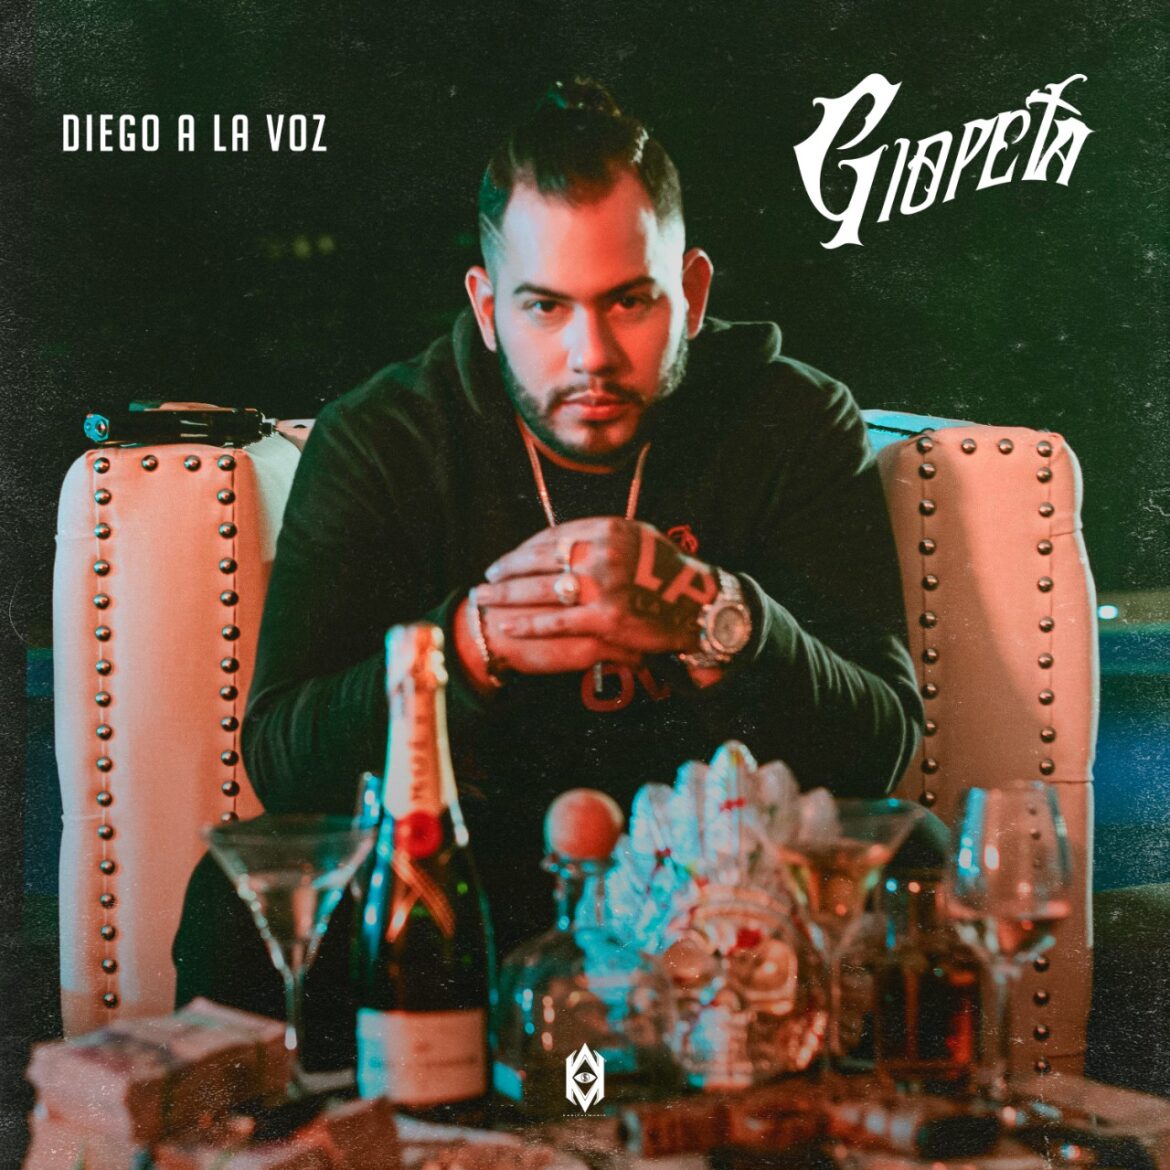 A ritmo de corrido mexicano Diego A La Voz presenta “Glopeta”